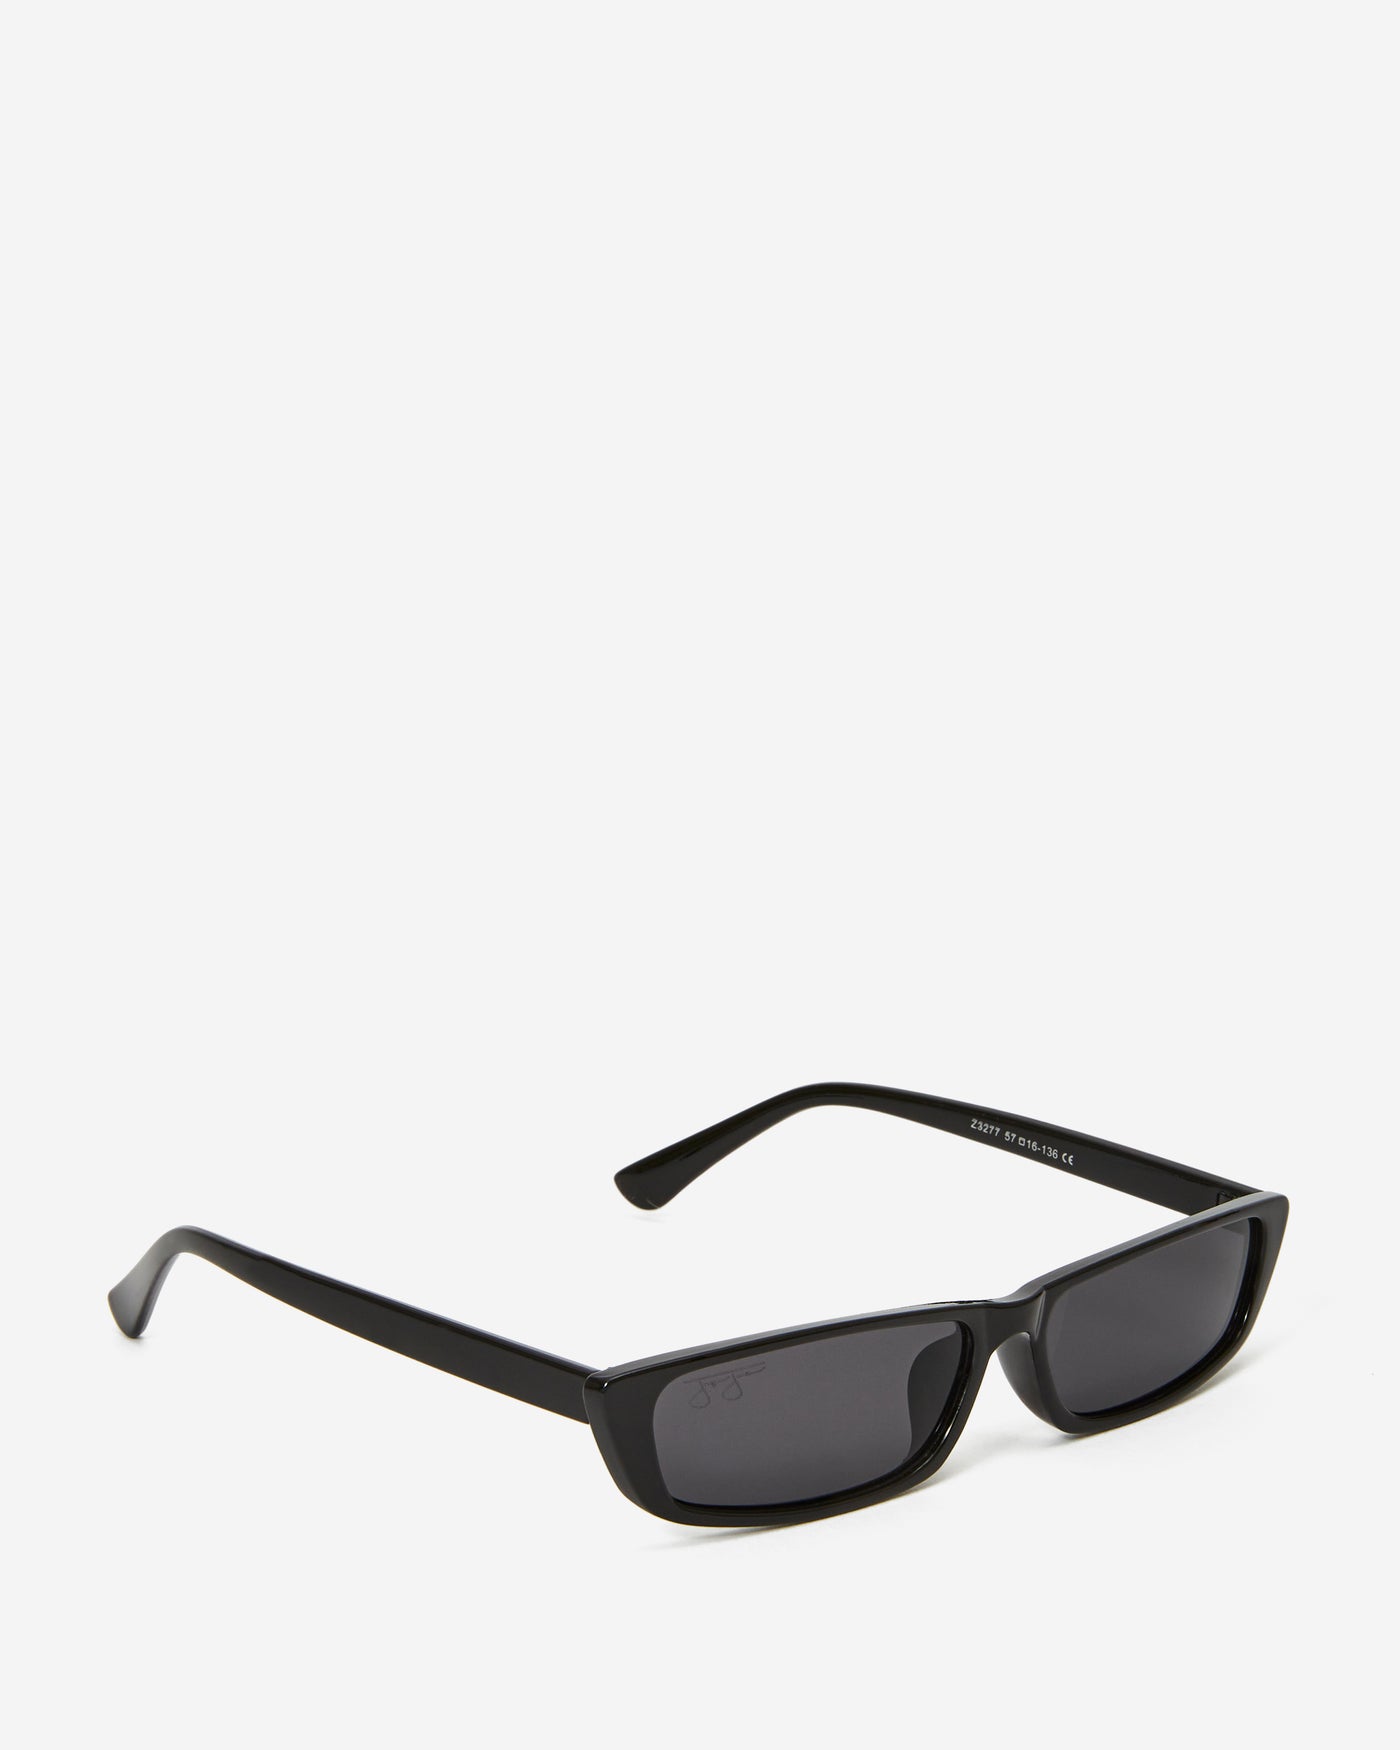 Slim Rectangle Sunglasses - Black Frame with Smoke Lens Sunglasses Joey James, The Label   